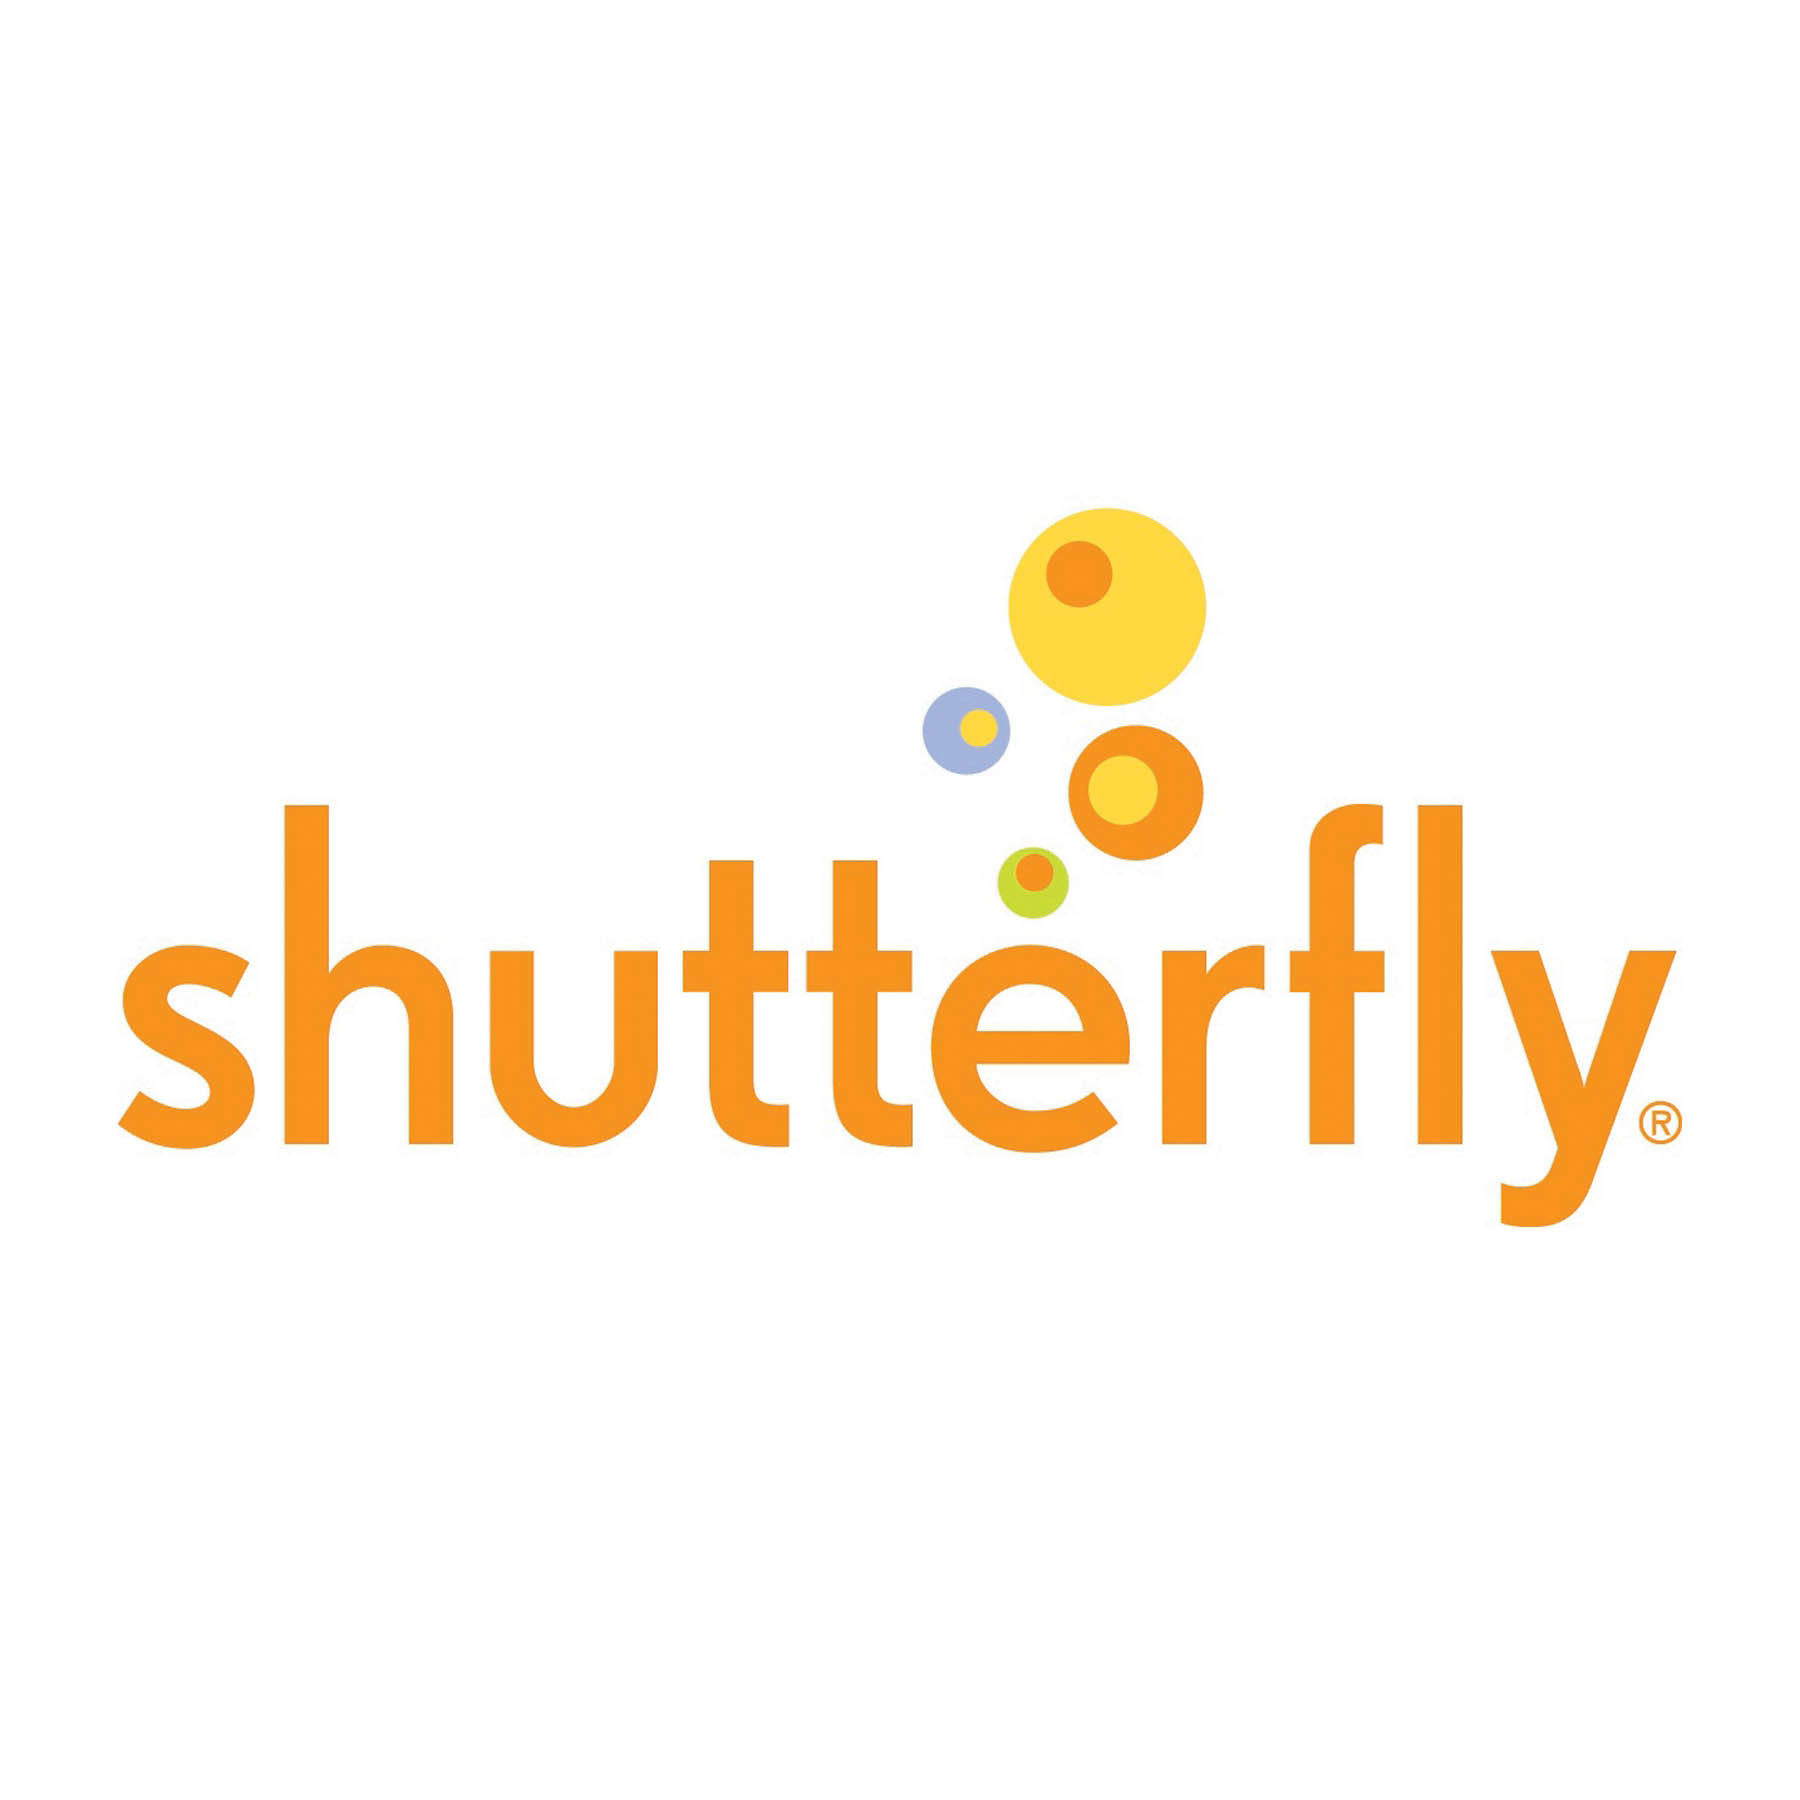 Shutterfly Logo - Hitech Review